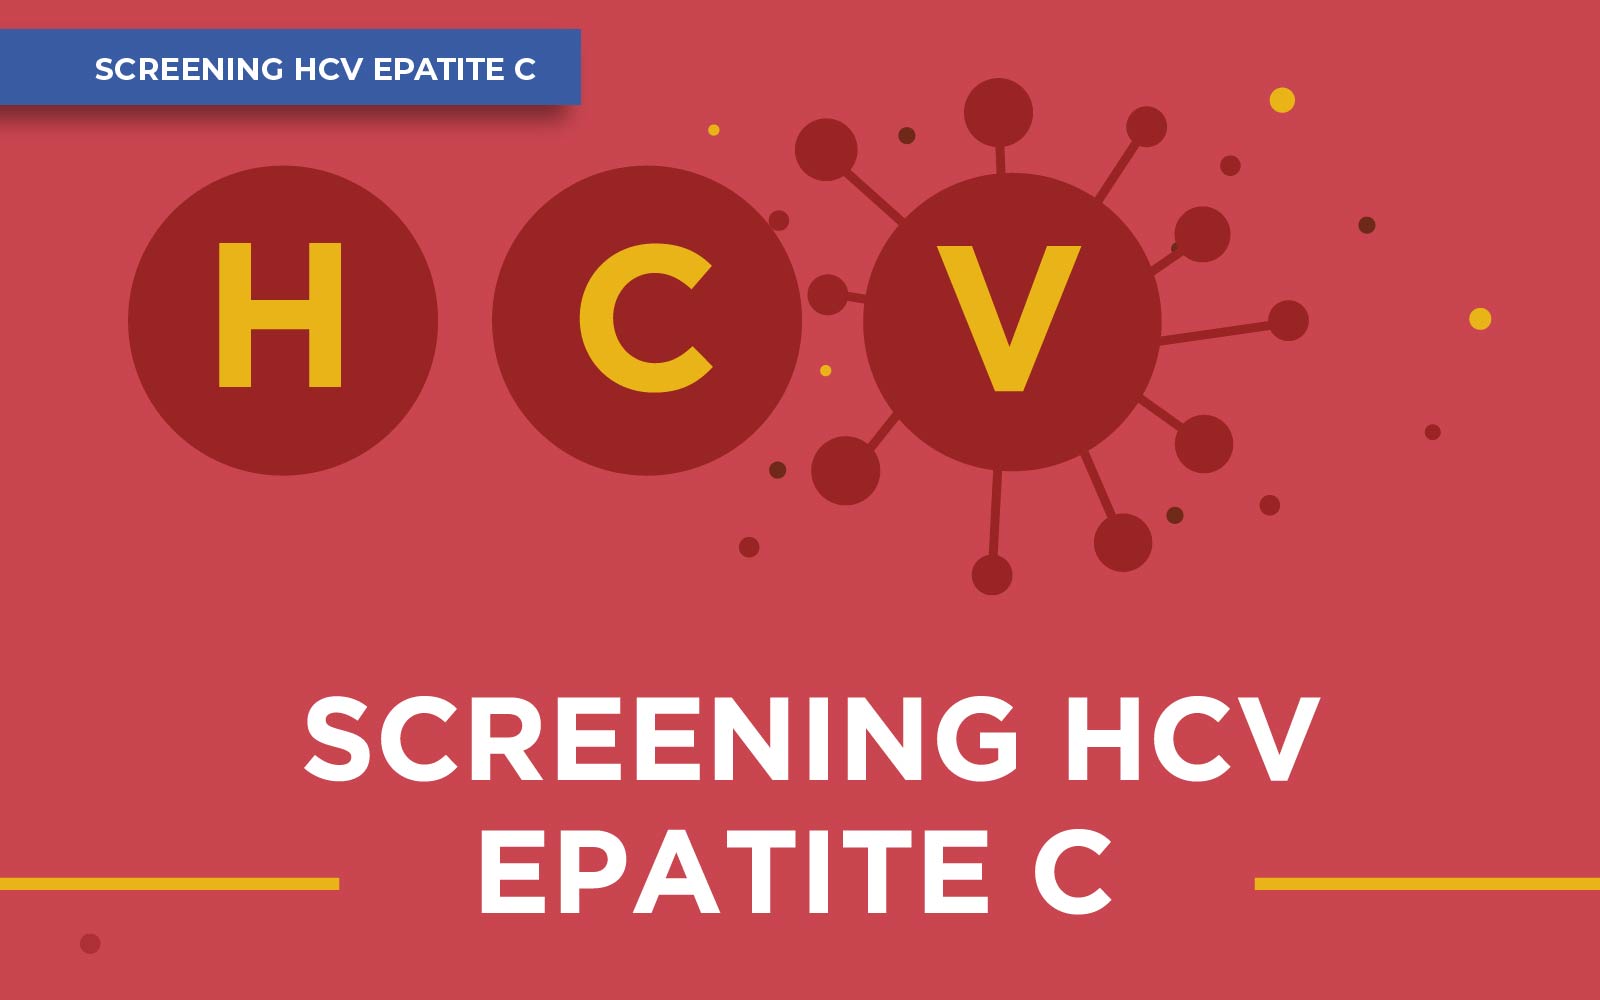 La campagna di screening HCV